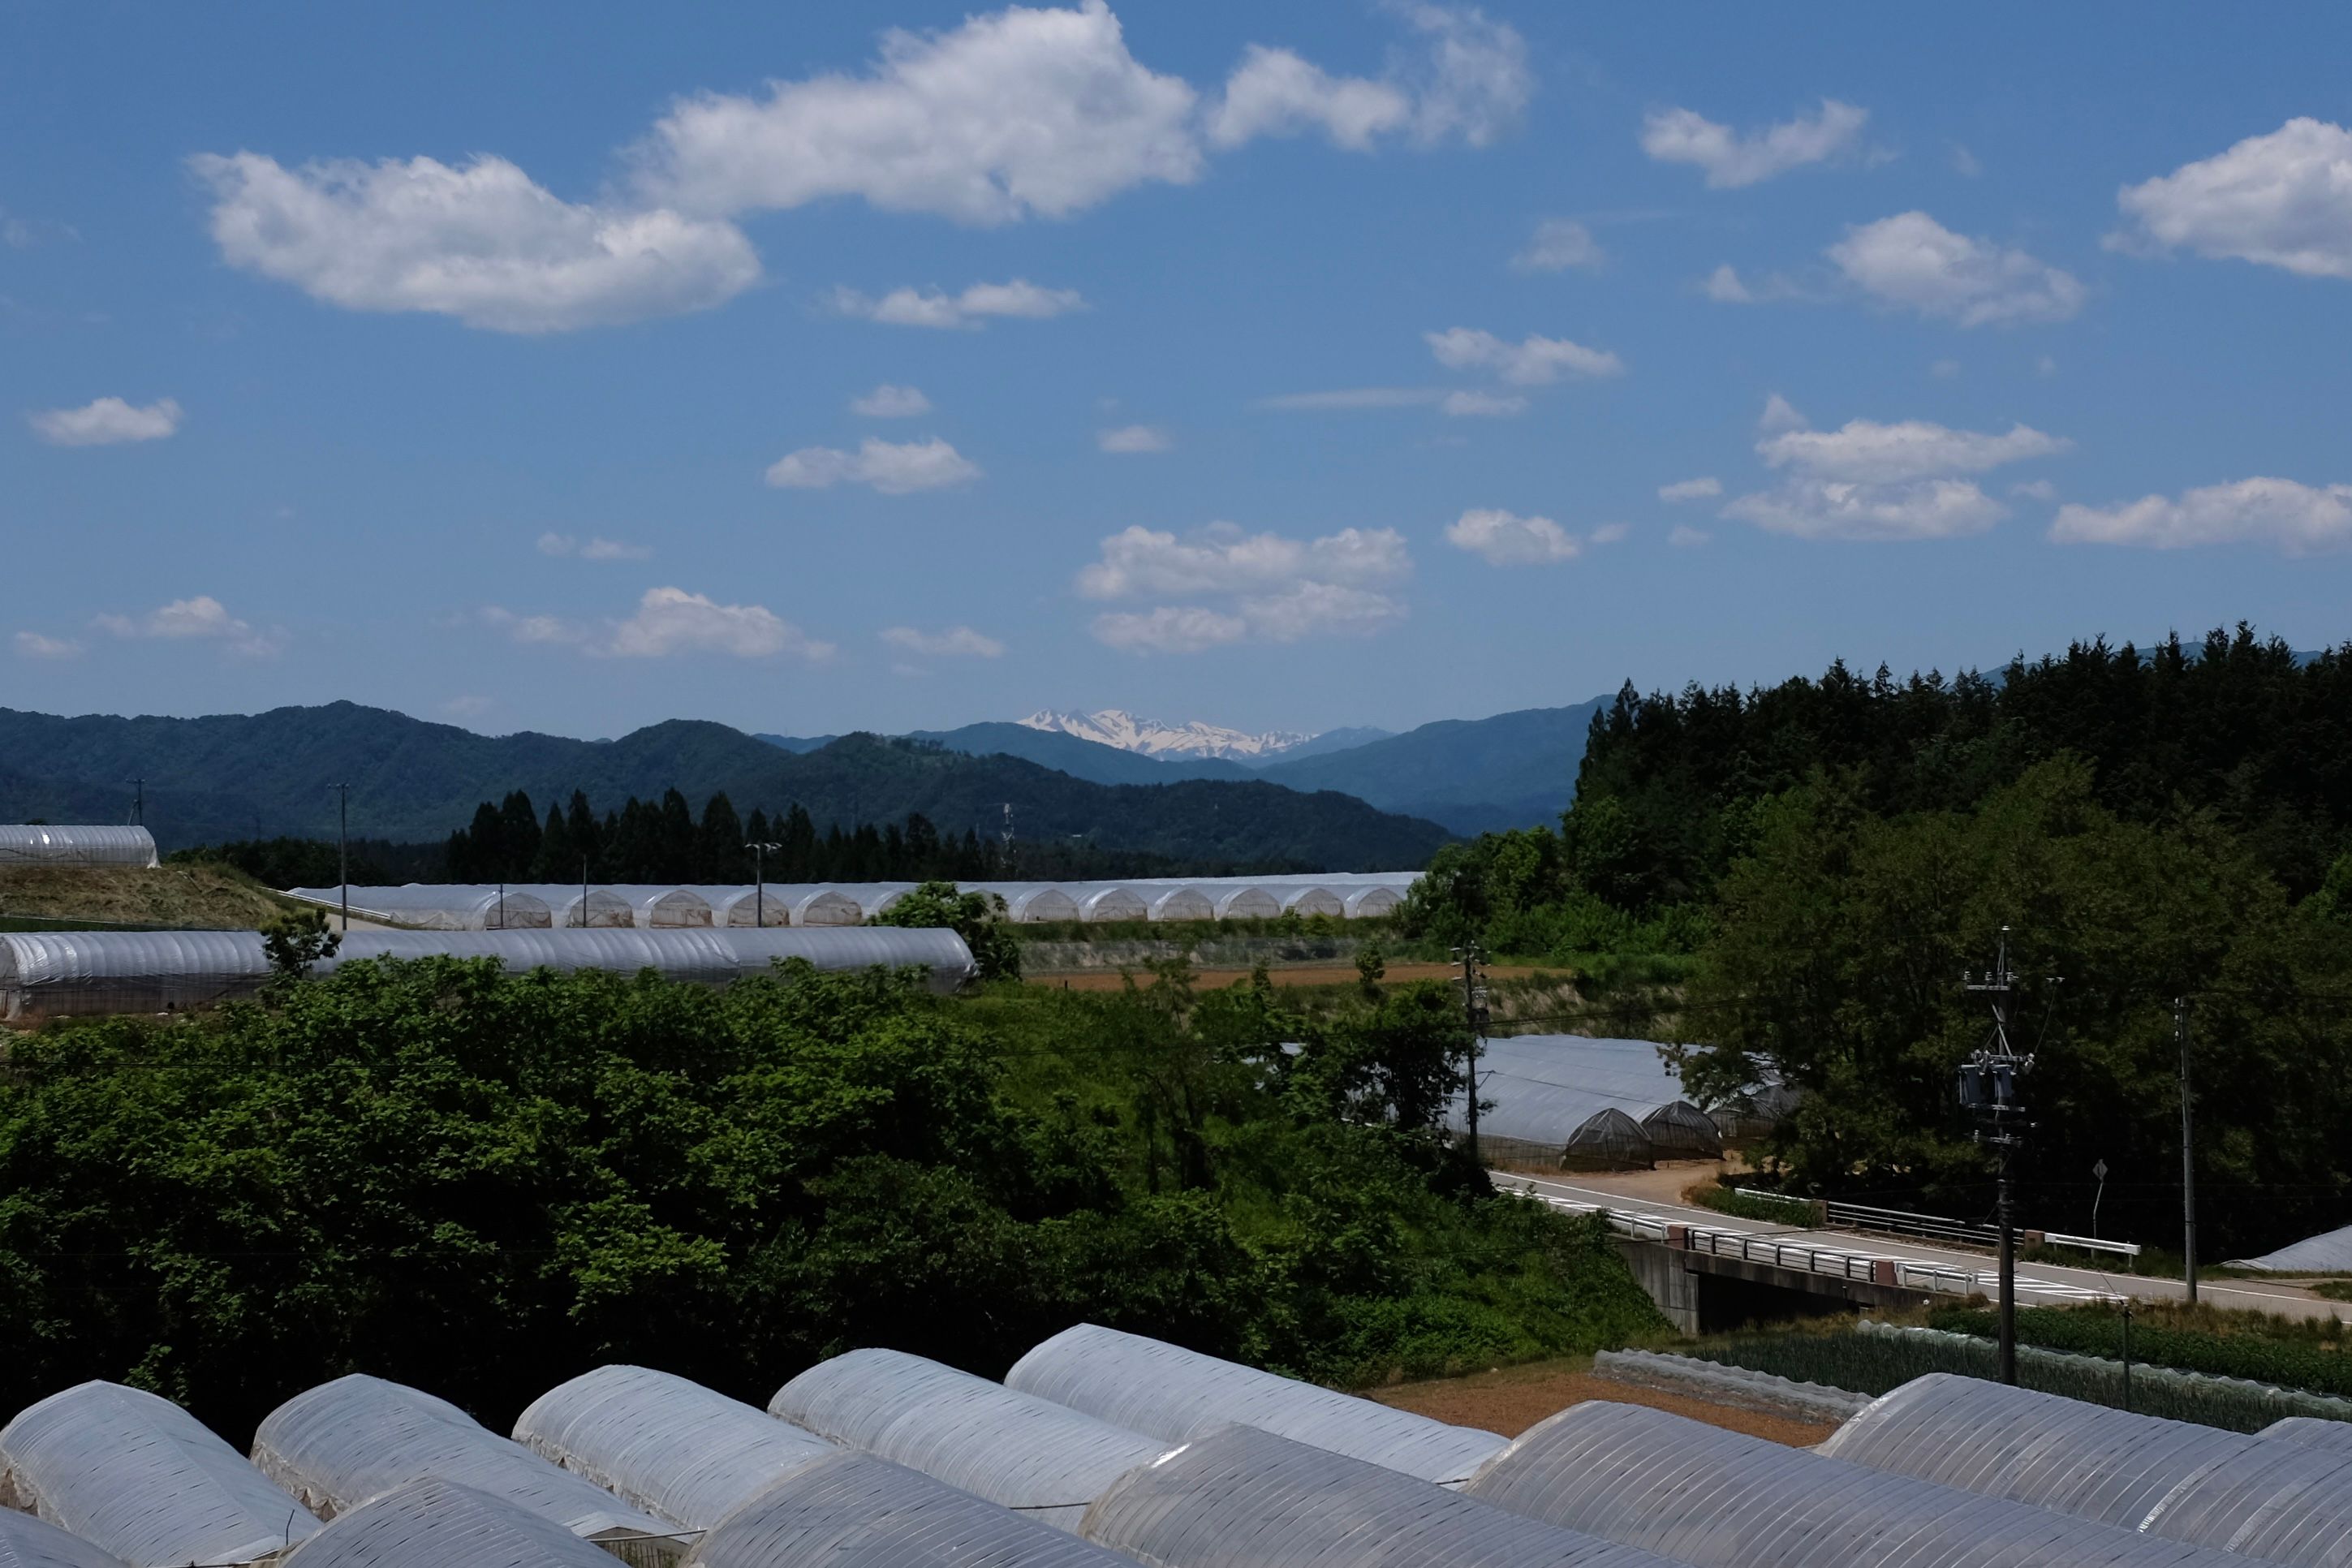 A view of distant Hakusan across the fields from Hida Takayama, Gifu.